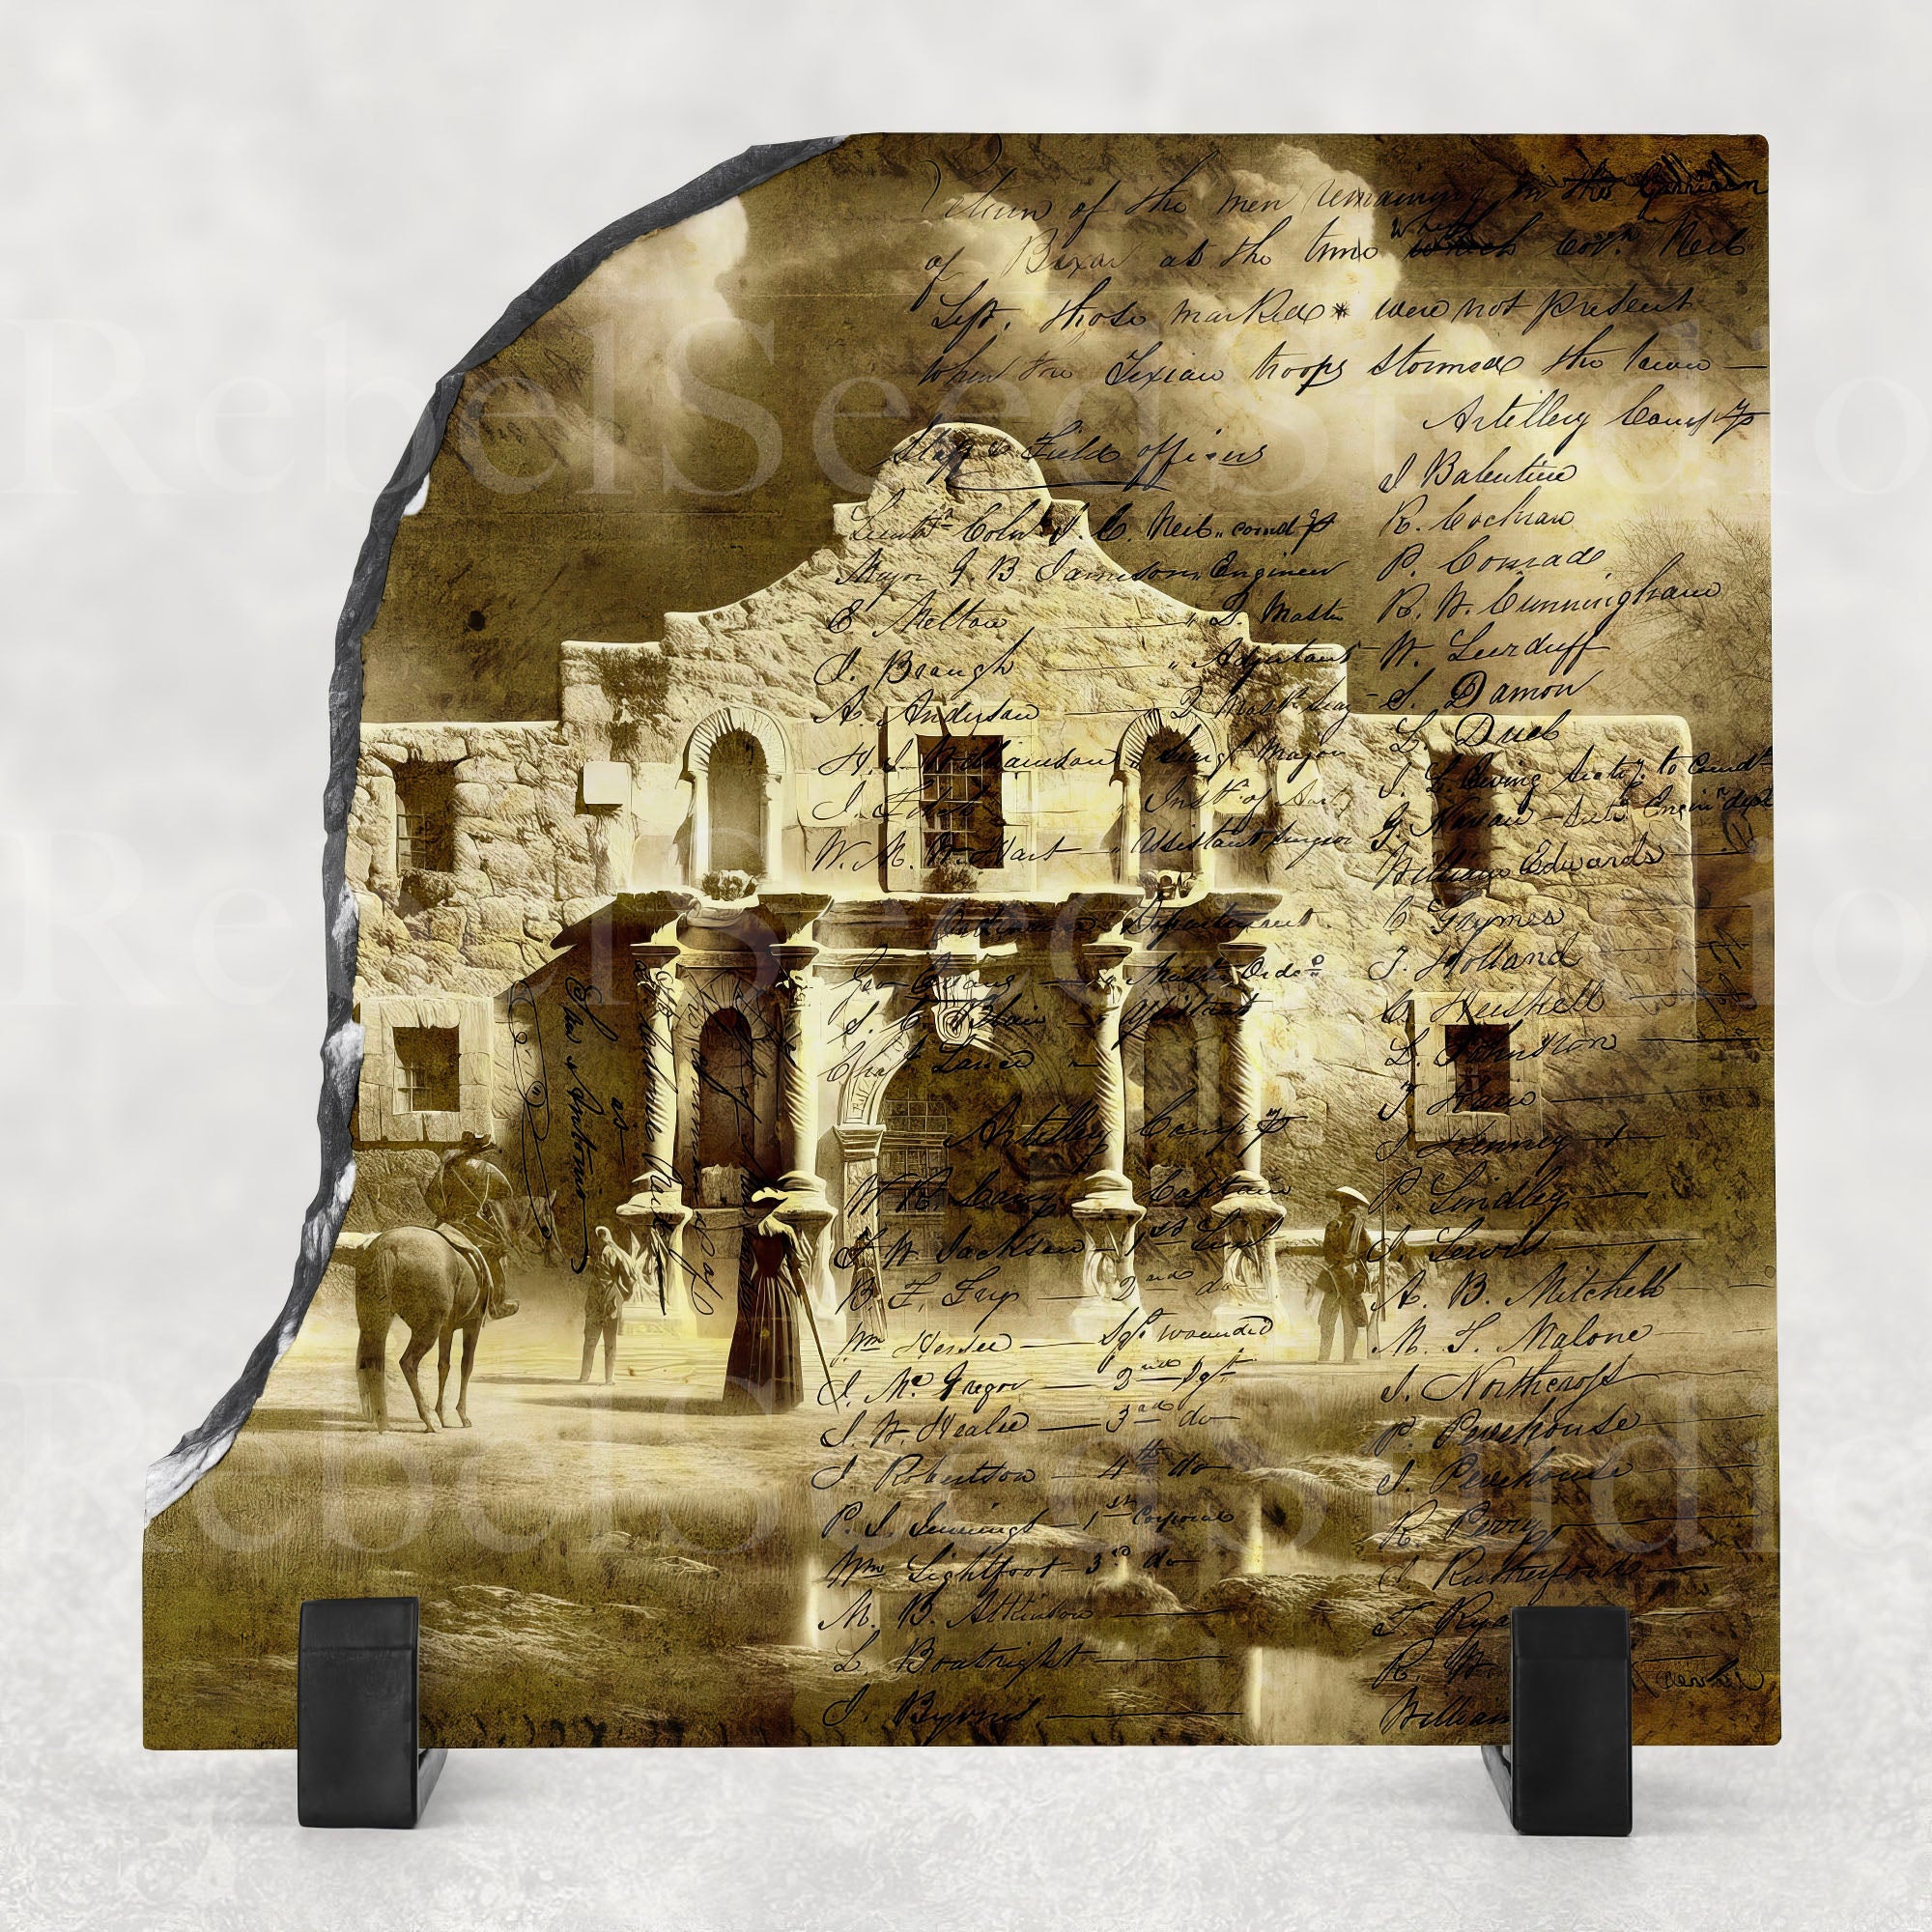 Alamo & Muster Roll - Tabletop Art (Slate/Stone Print)